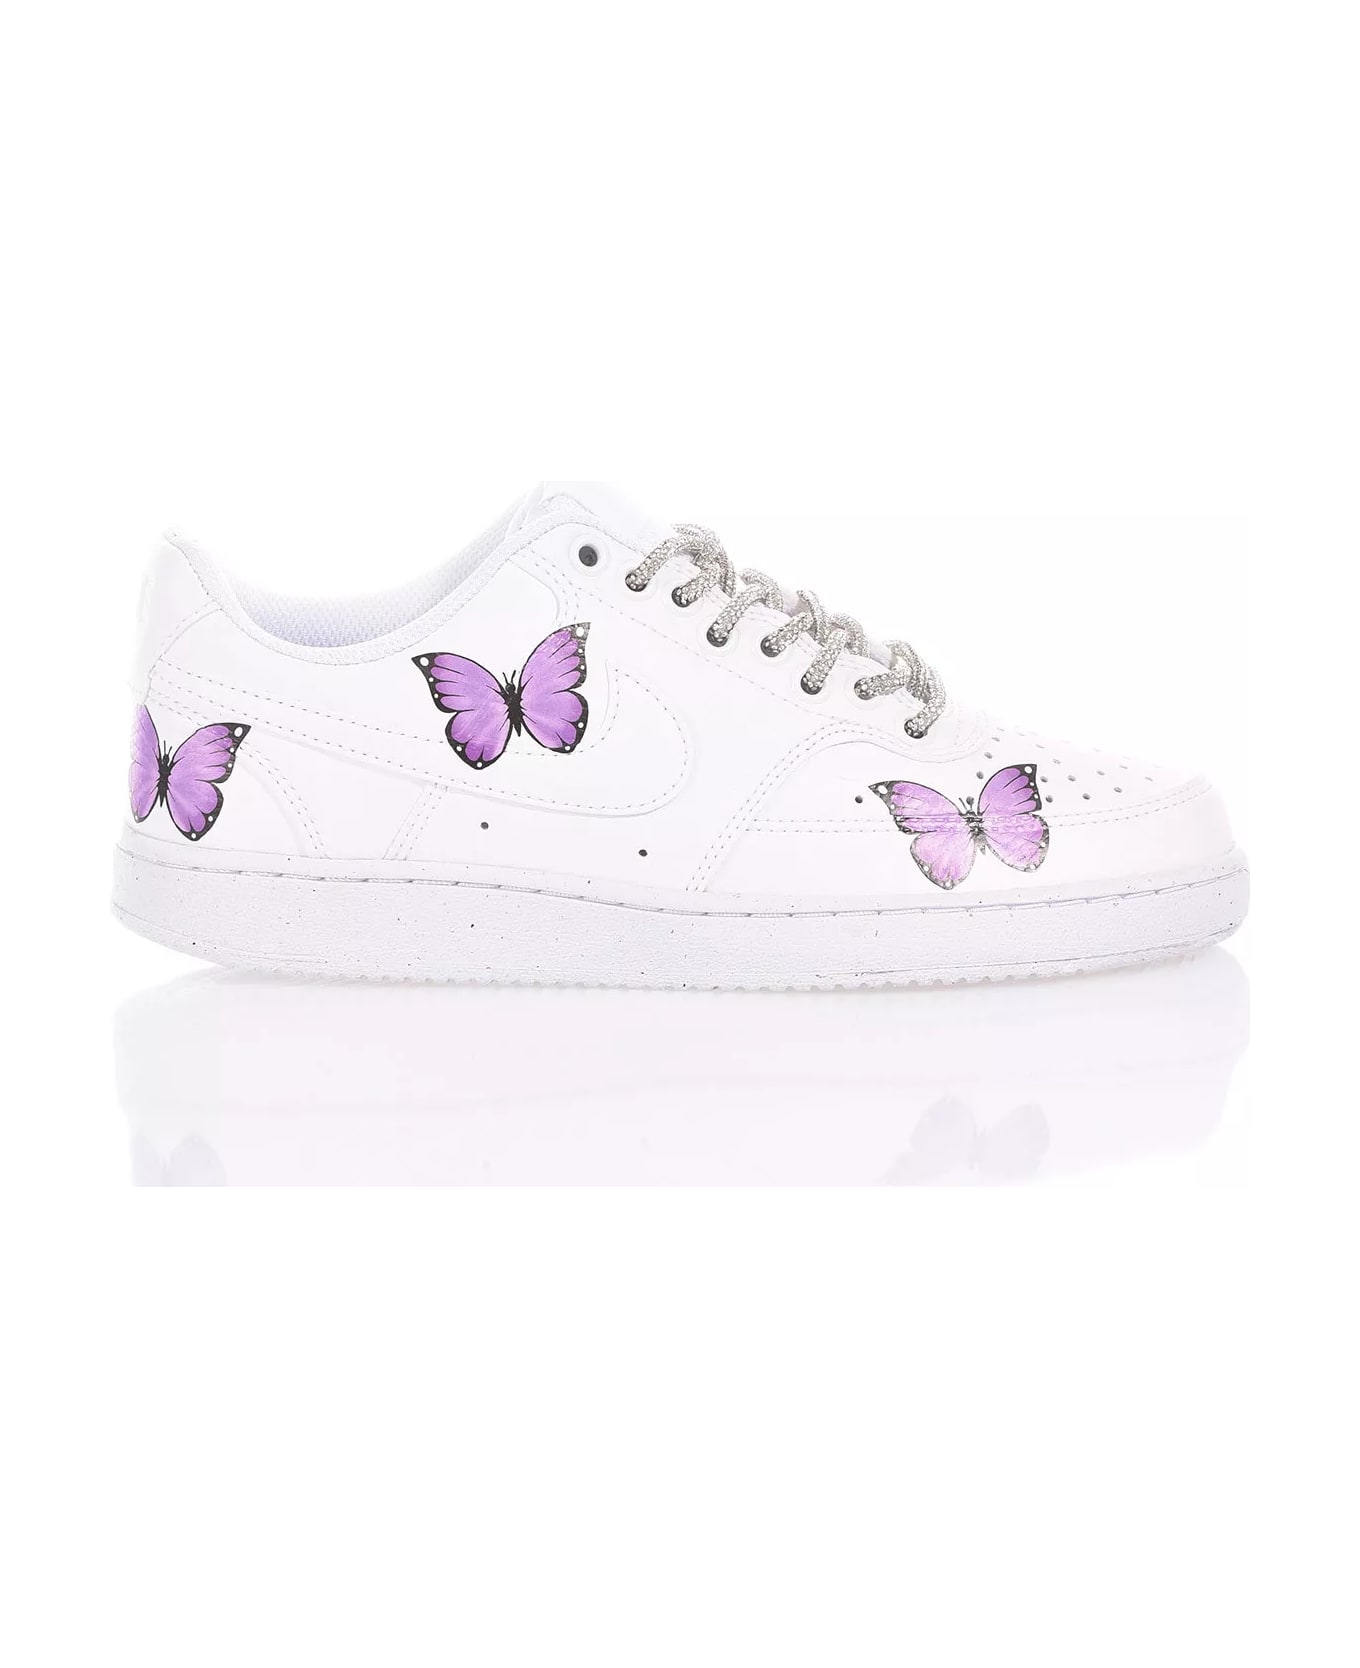 Mimanera Nike Butterfly Violet Custom